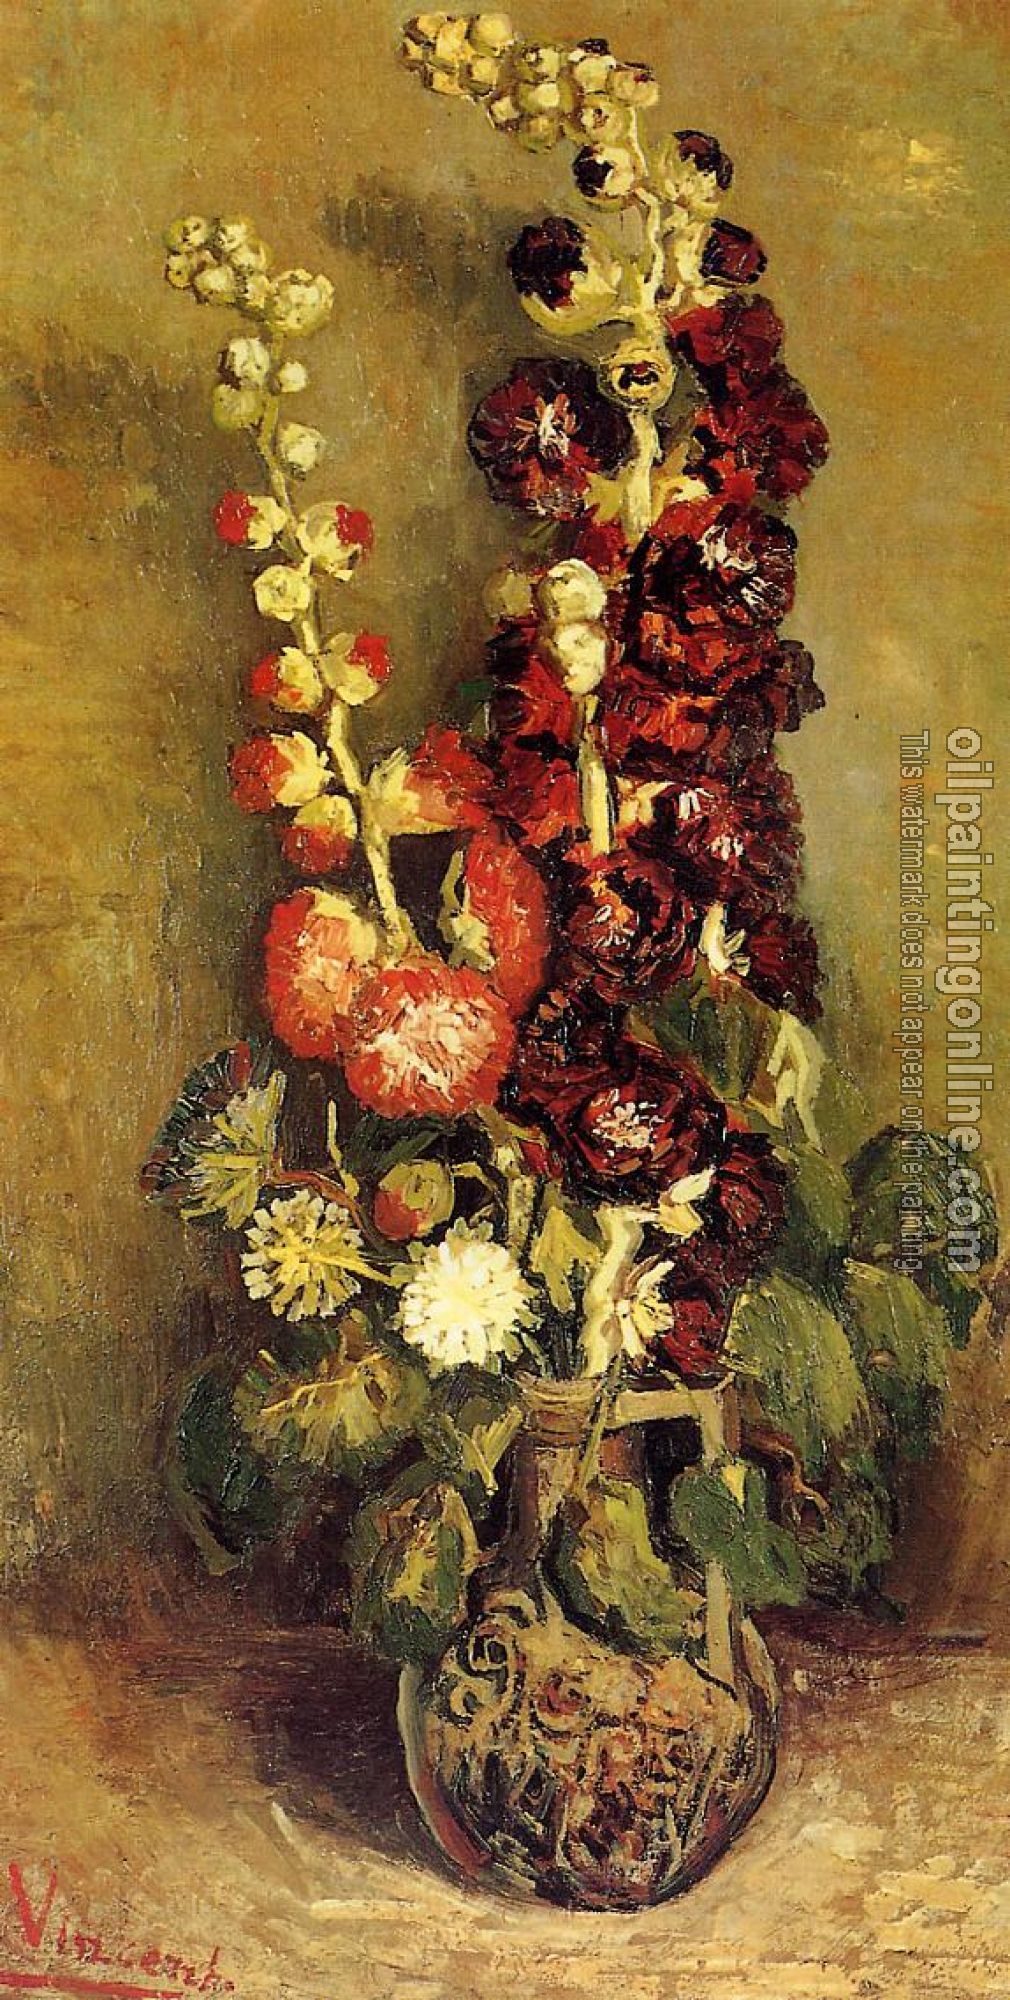 Gogh, Vincent van - Vase with Hollyhocks